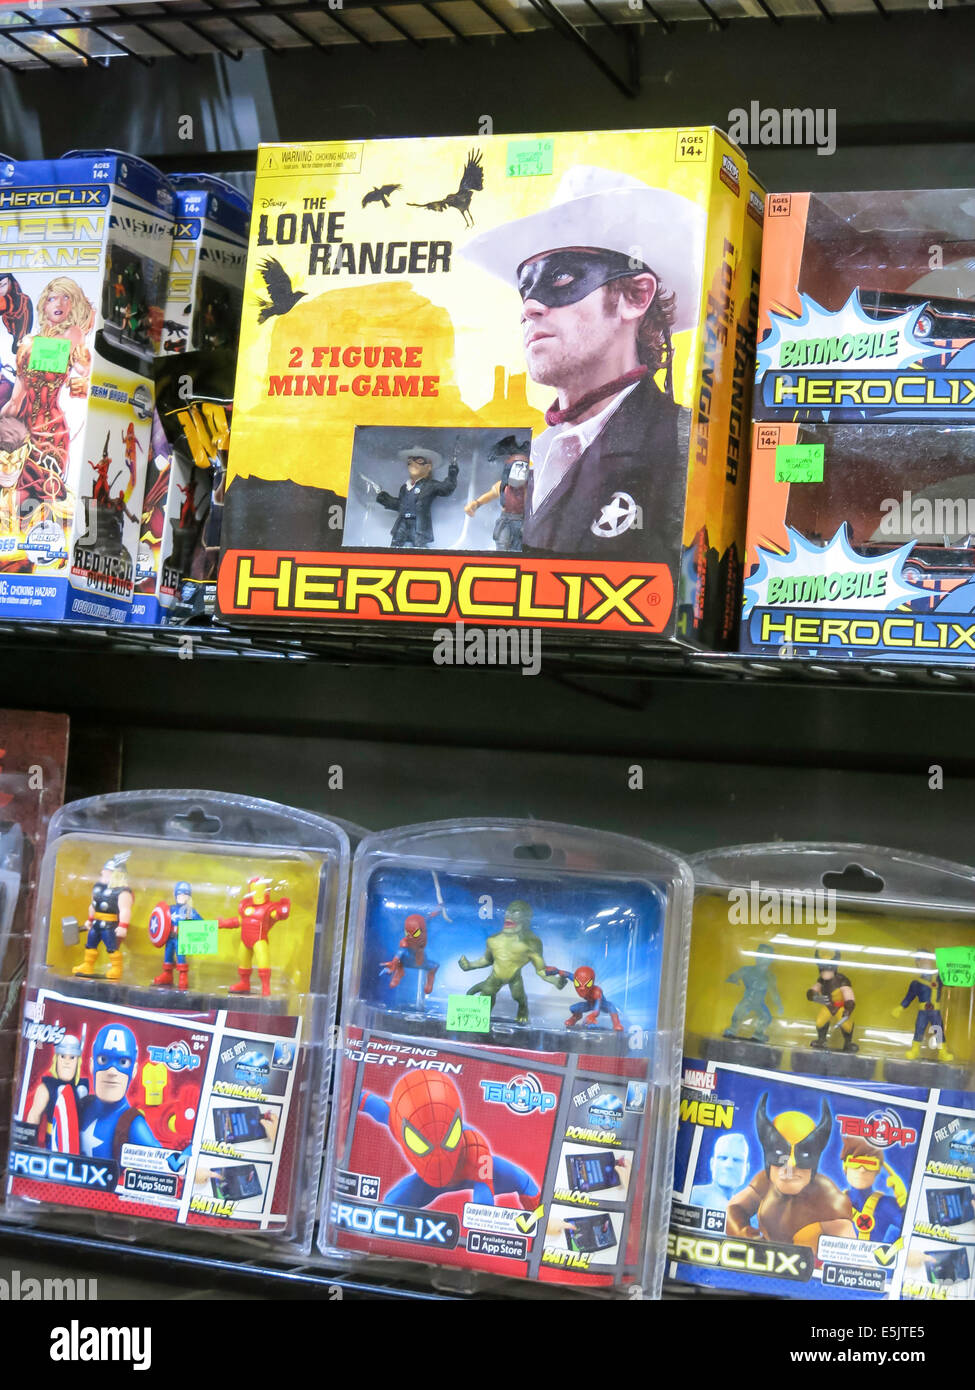 The Lone Ranger Mini-Game 2 Figure Box Display, Midtown Comics Store, Times Square, NYC, USA Stock Photo